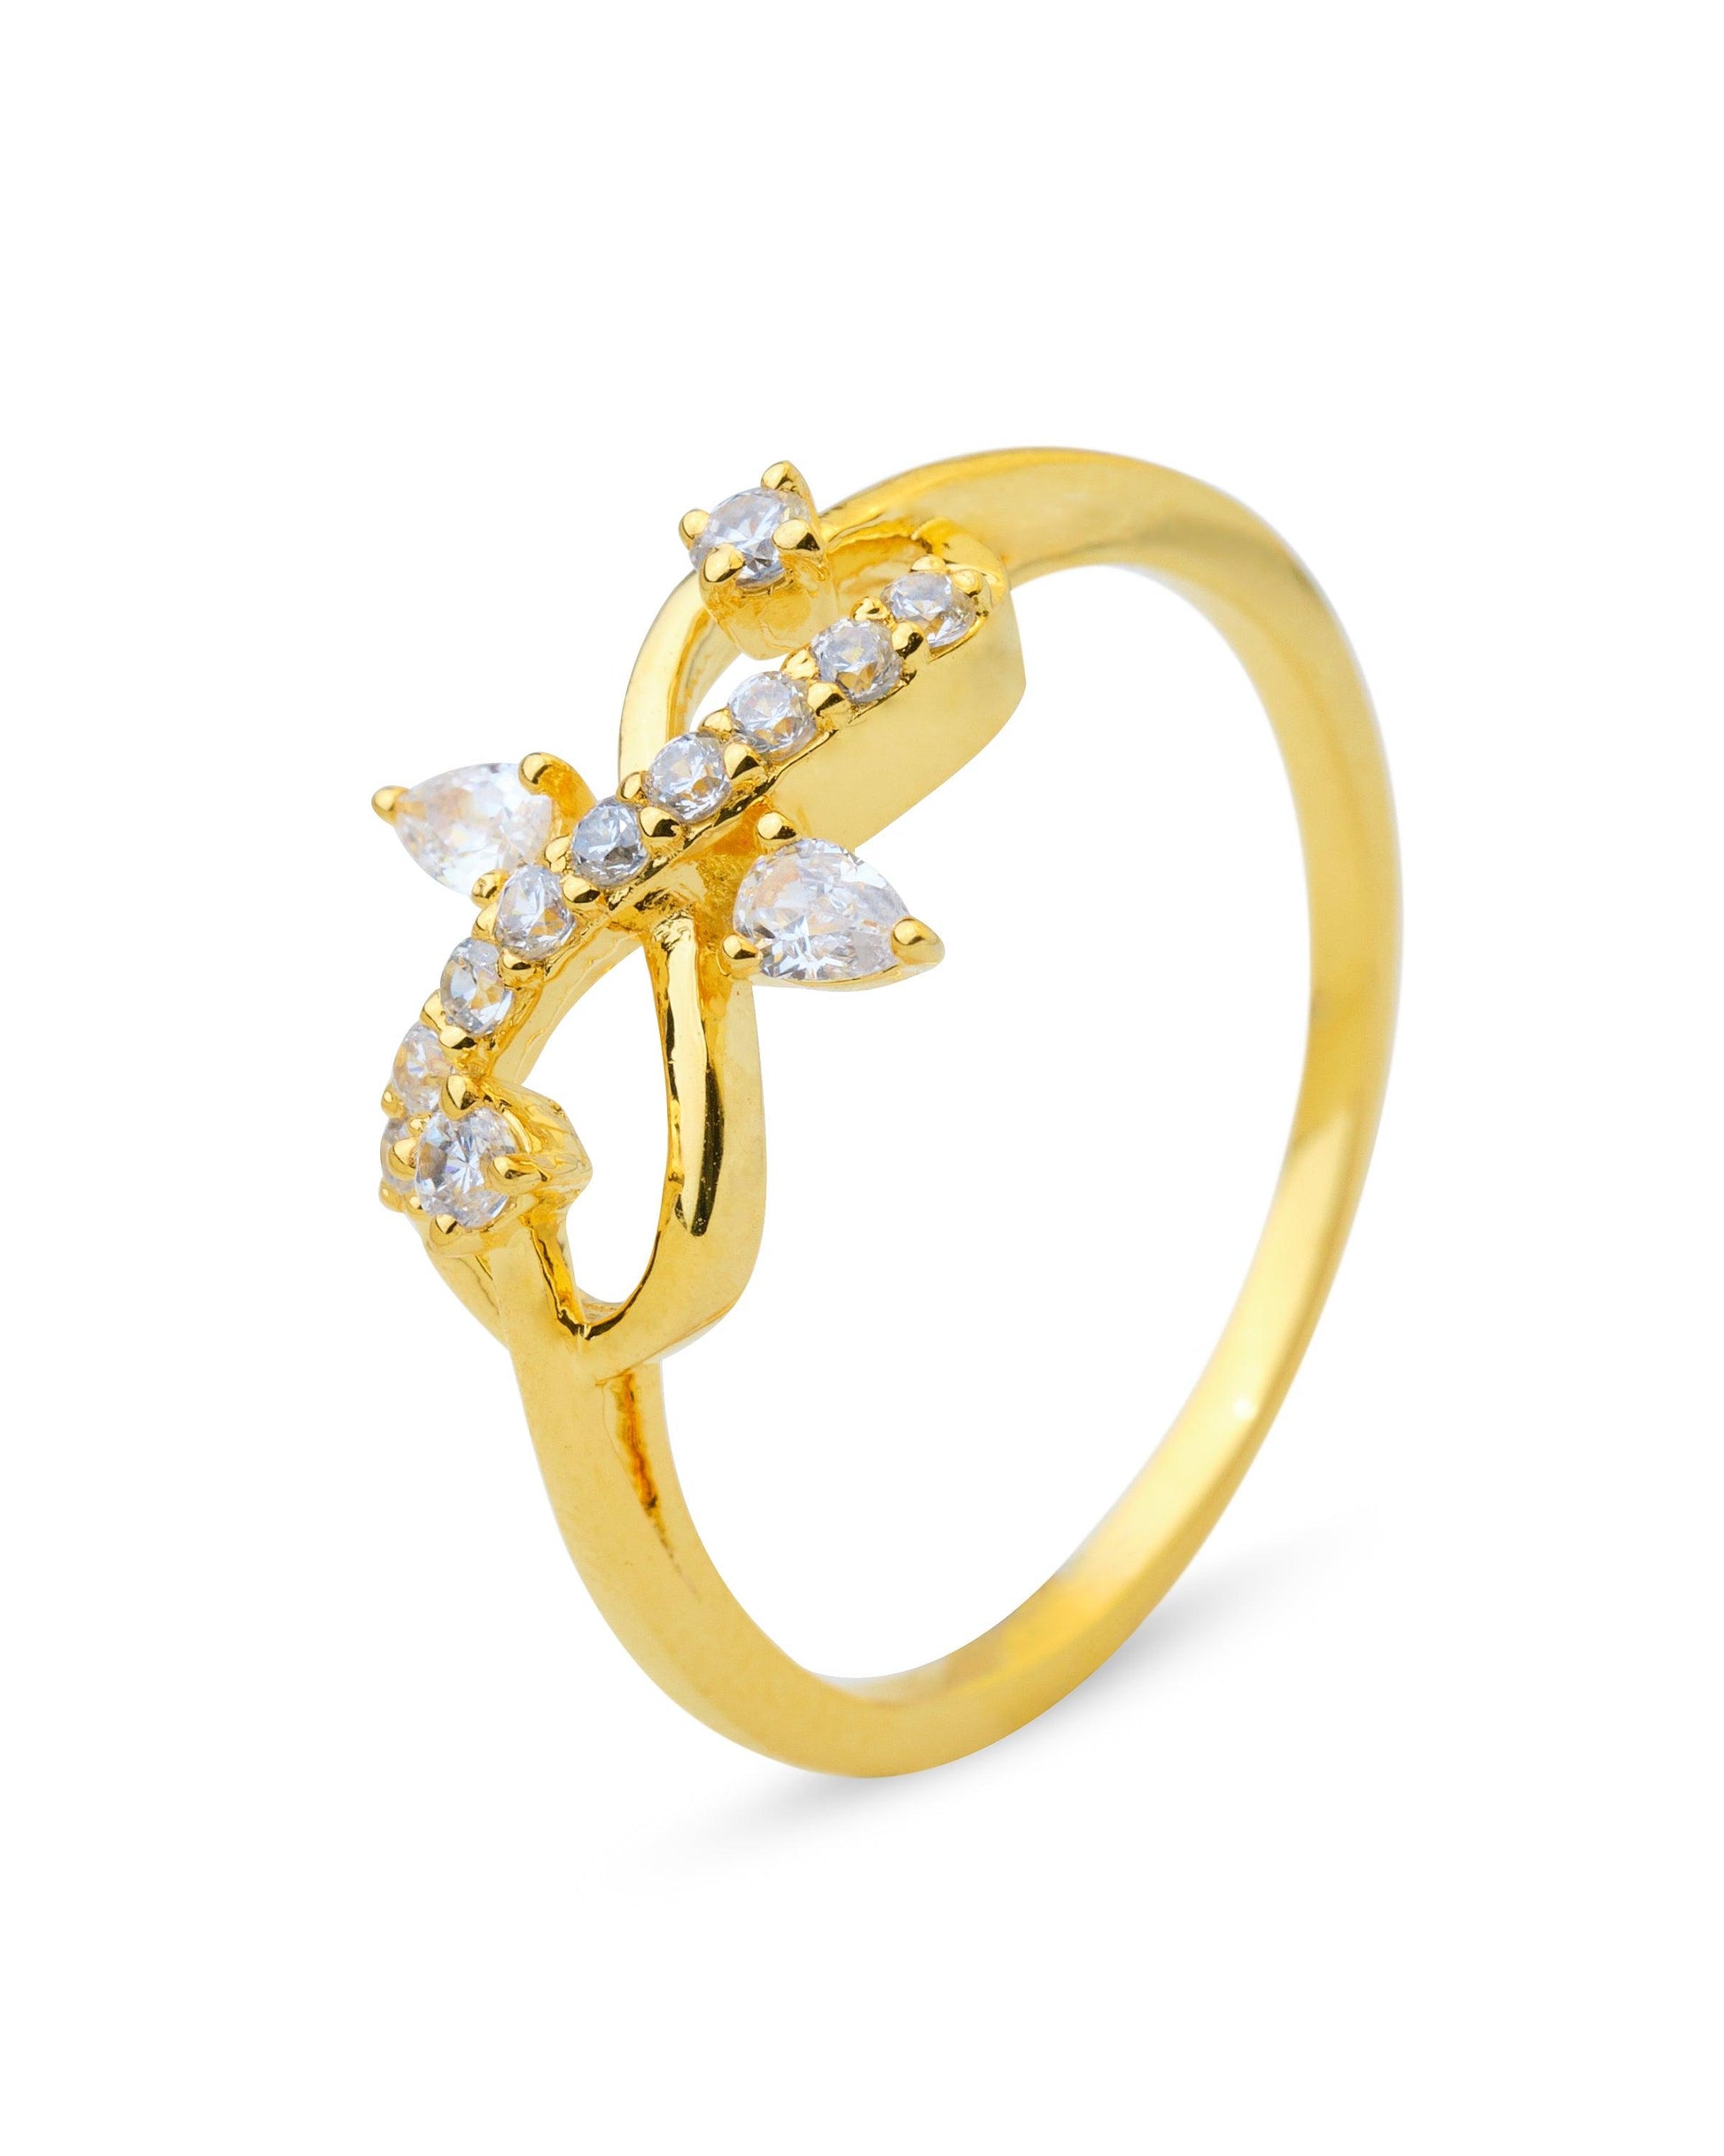 Isabel Miracle Gold & Diamond Ring - Chandrani Pearls